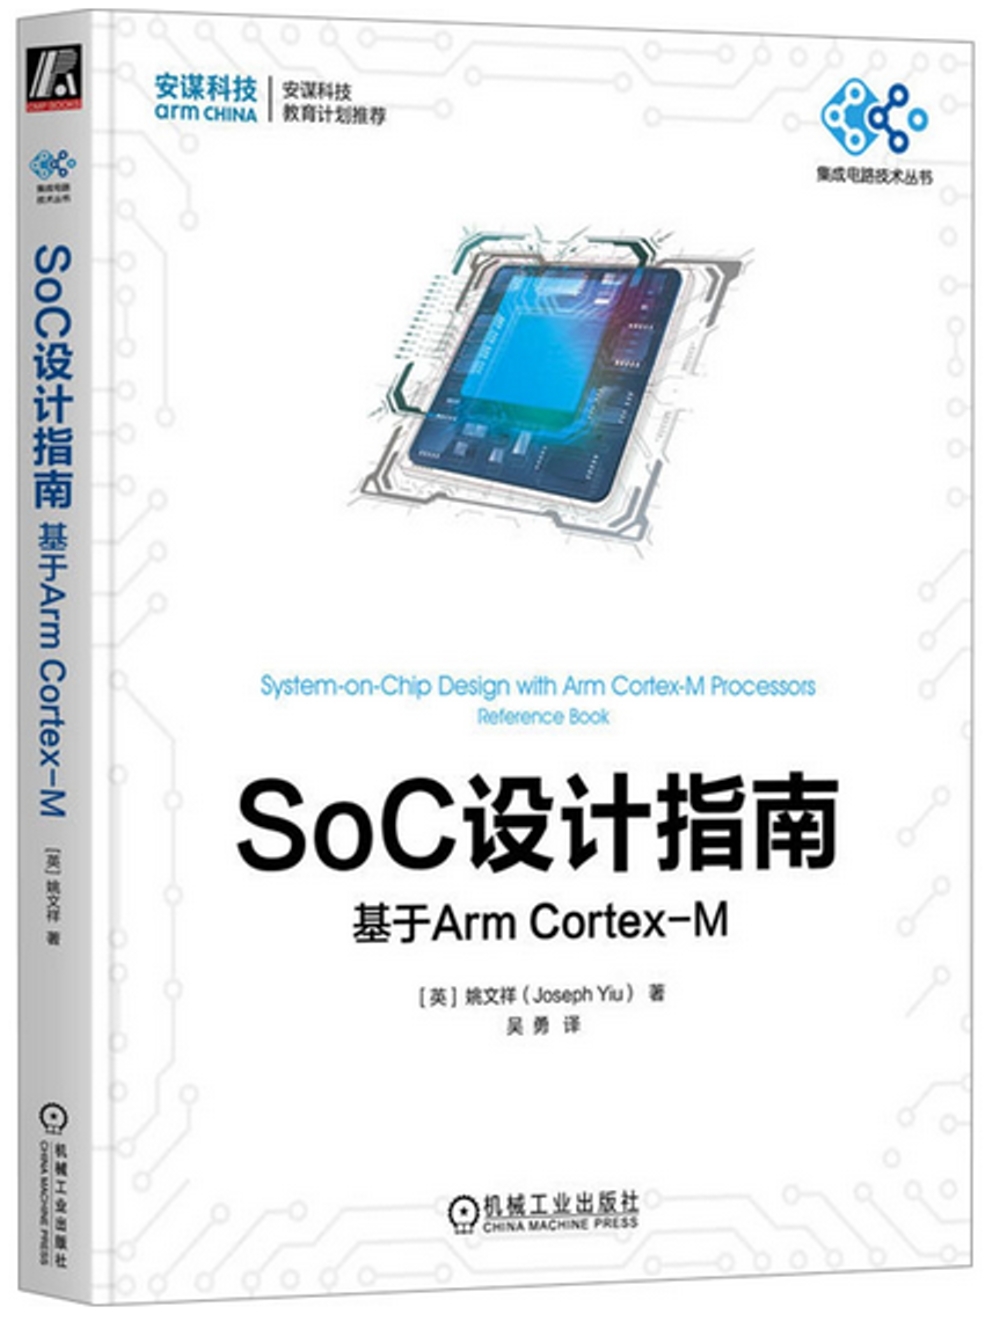 SoC設計指南：基於Arm Cortex-M